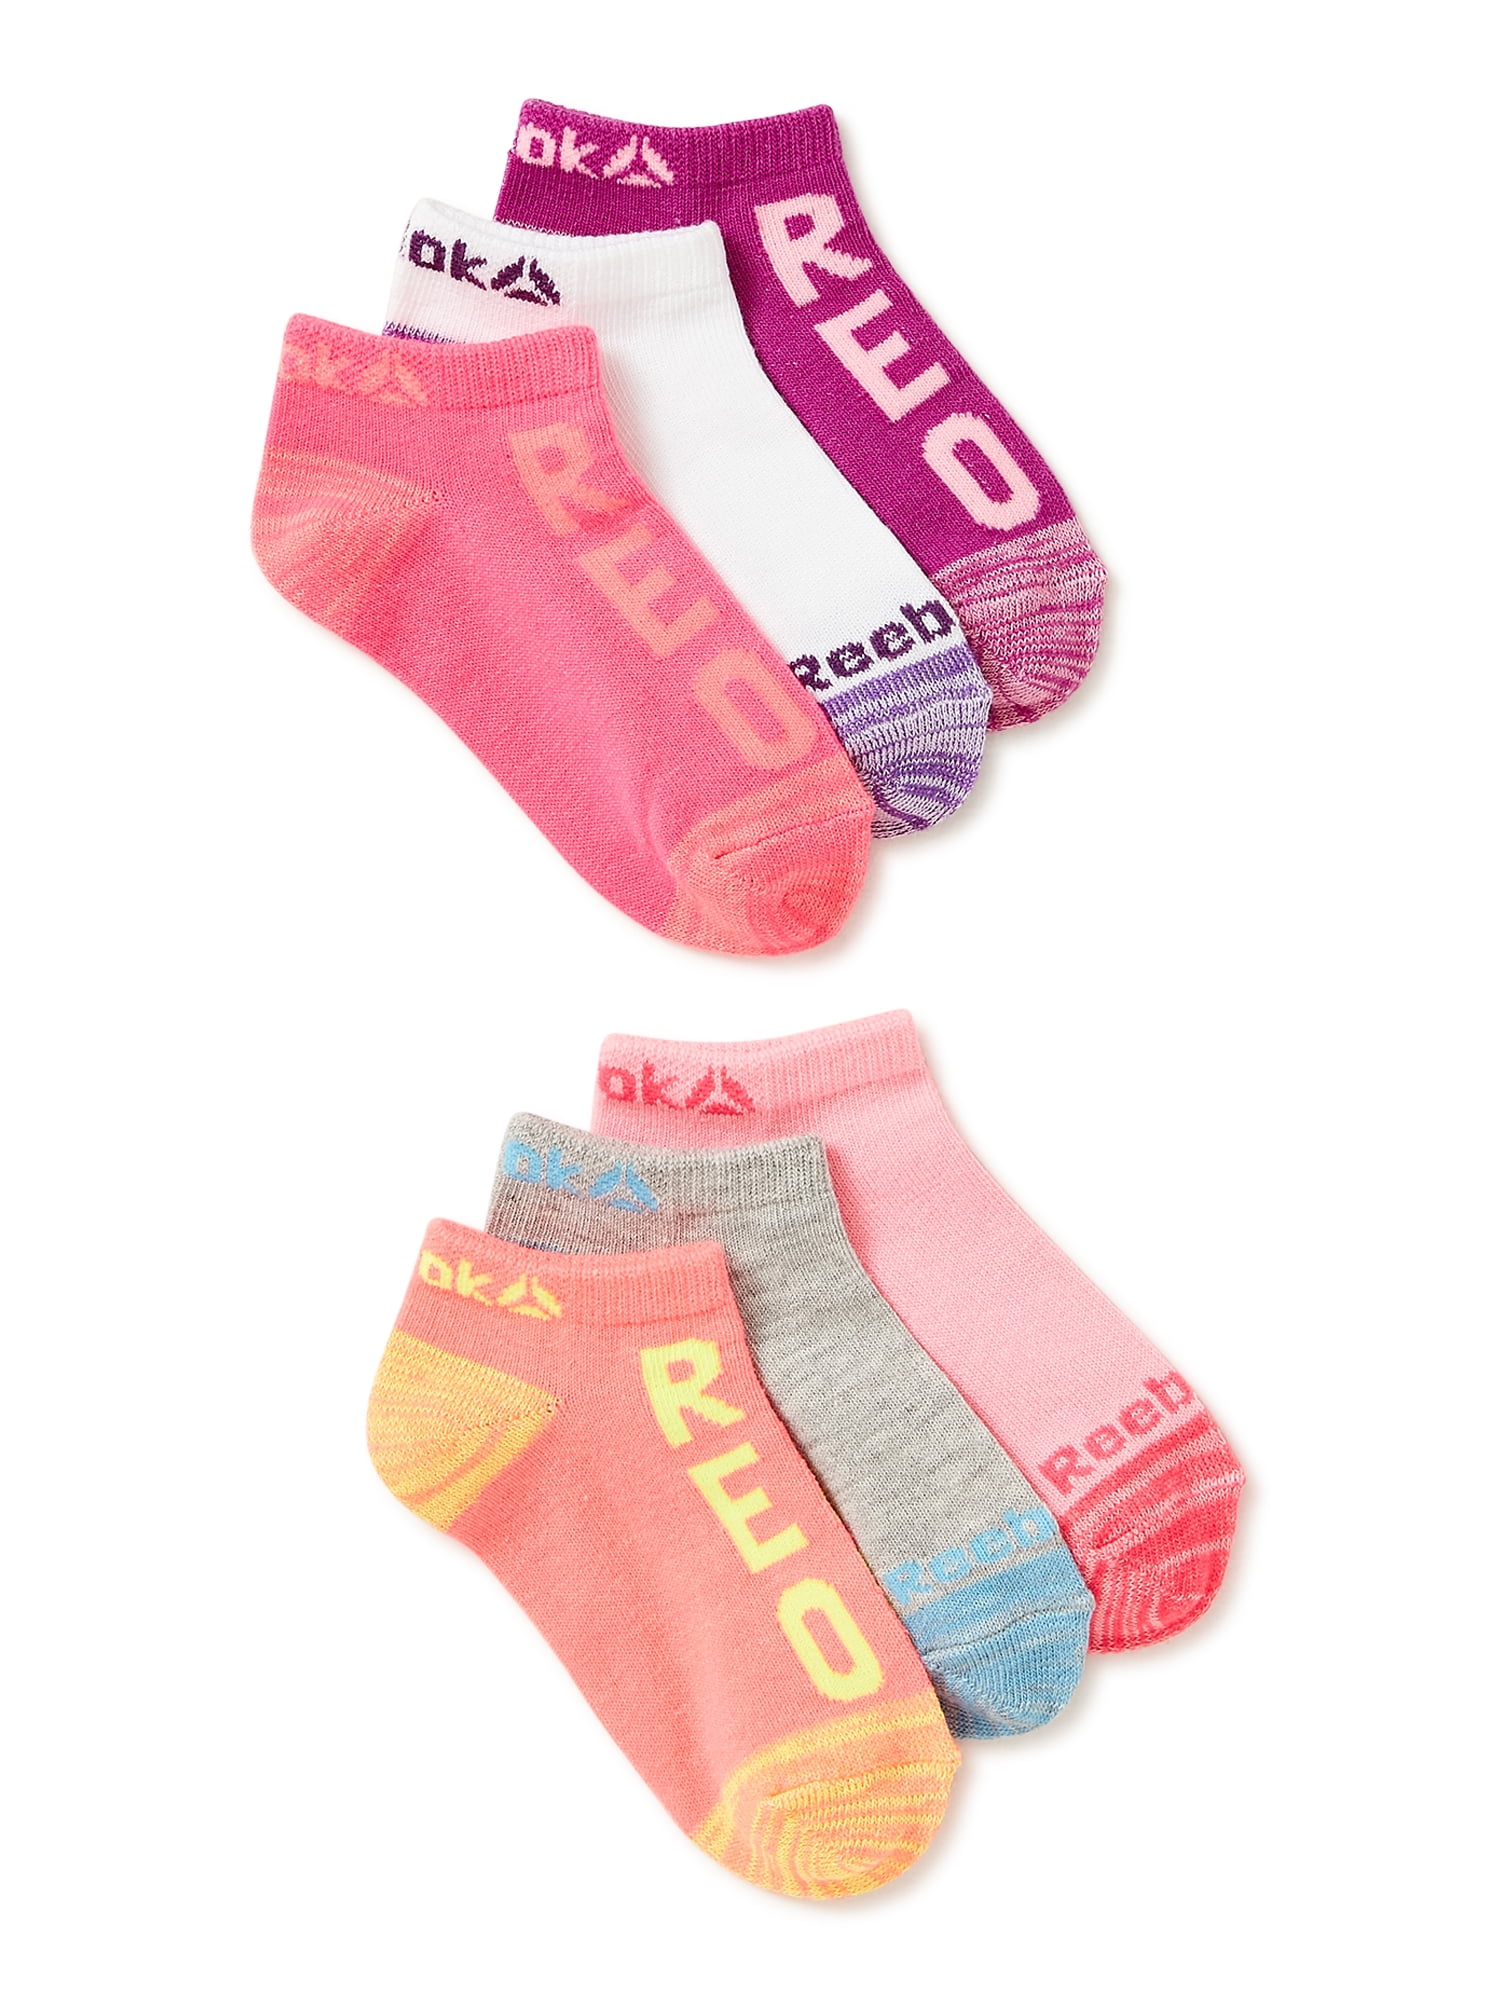 Reebok Kids Girls' Flatknit Low Cut Socks, 6 Pack